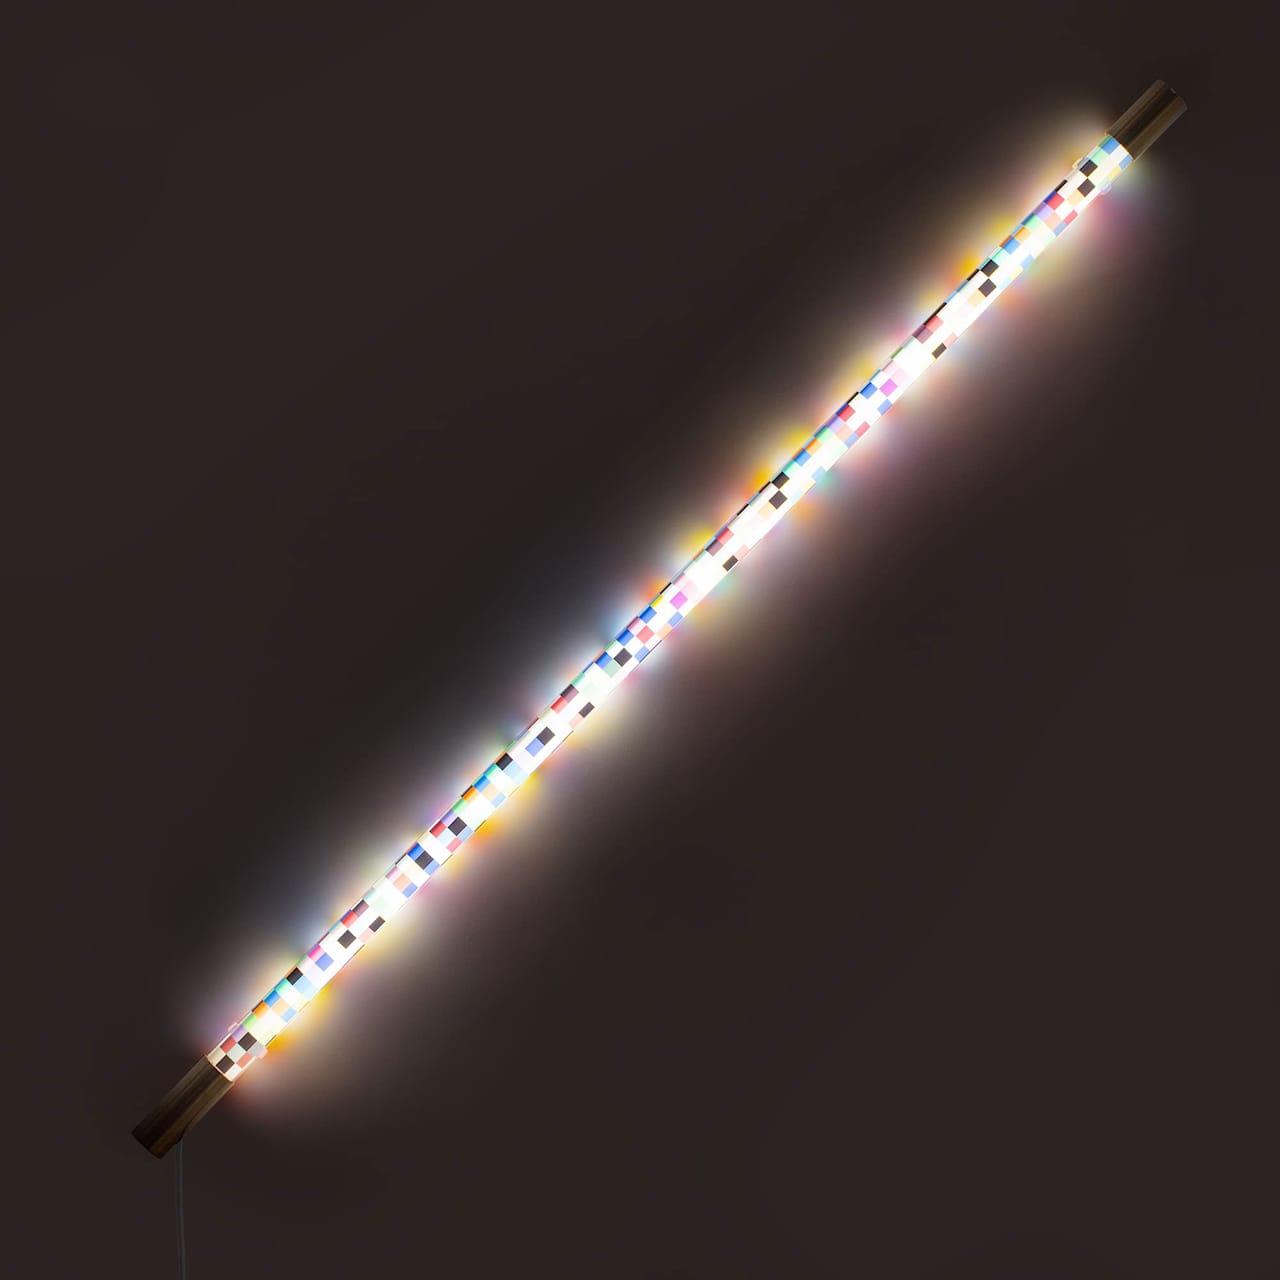 Linea Neon Lamp - Pixled